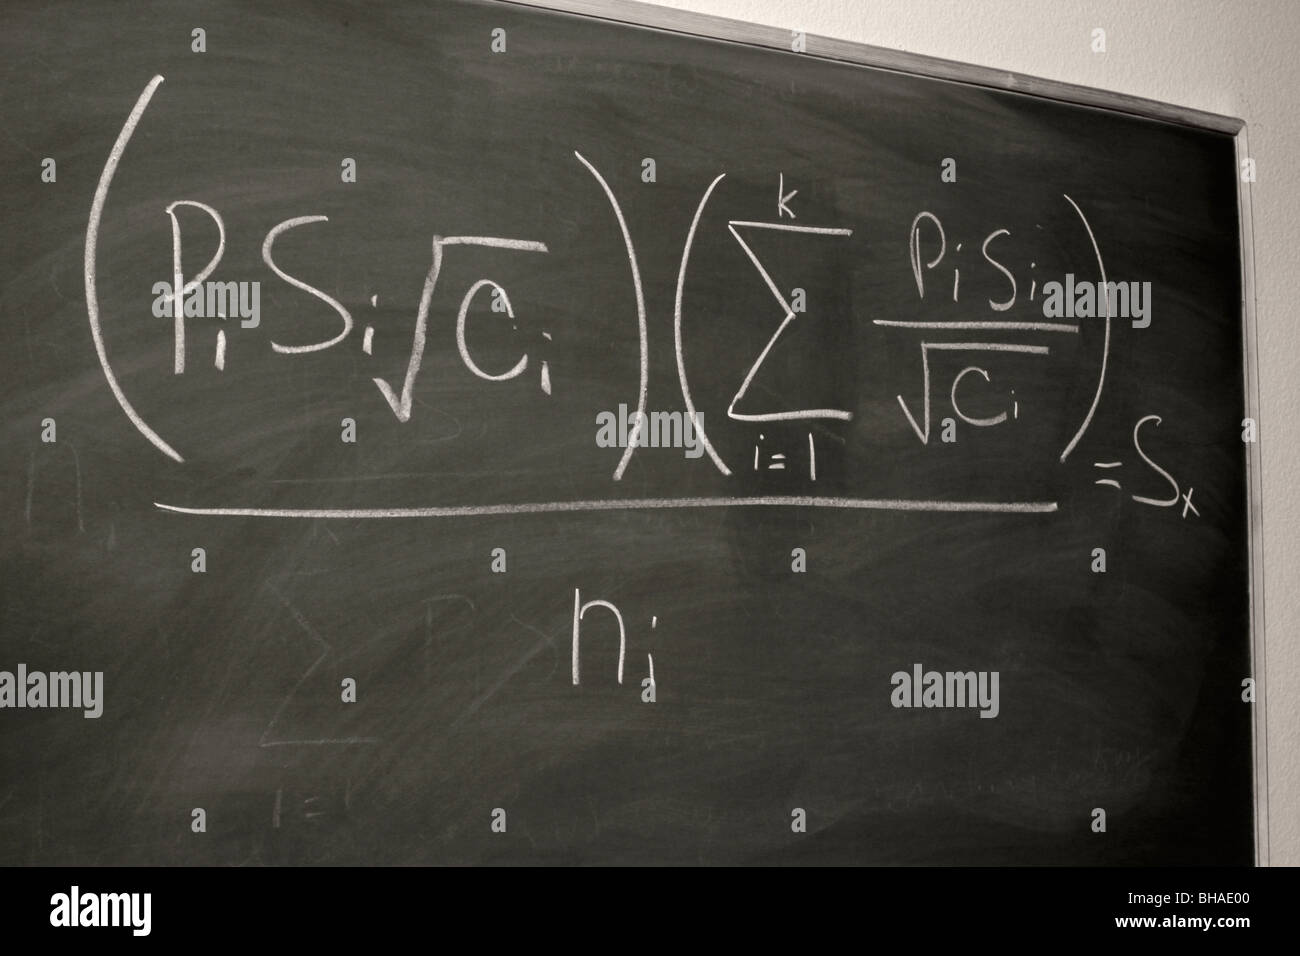 Mathematical formula on blackboard Stock Photo